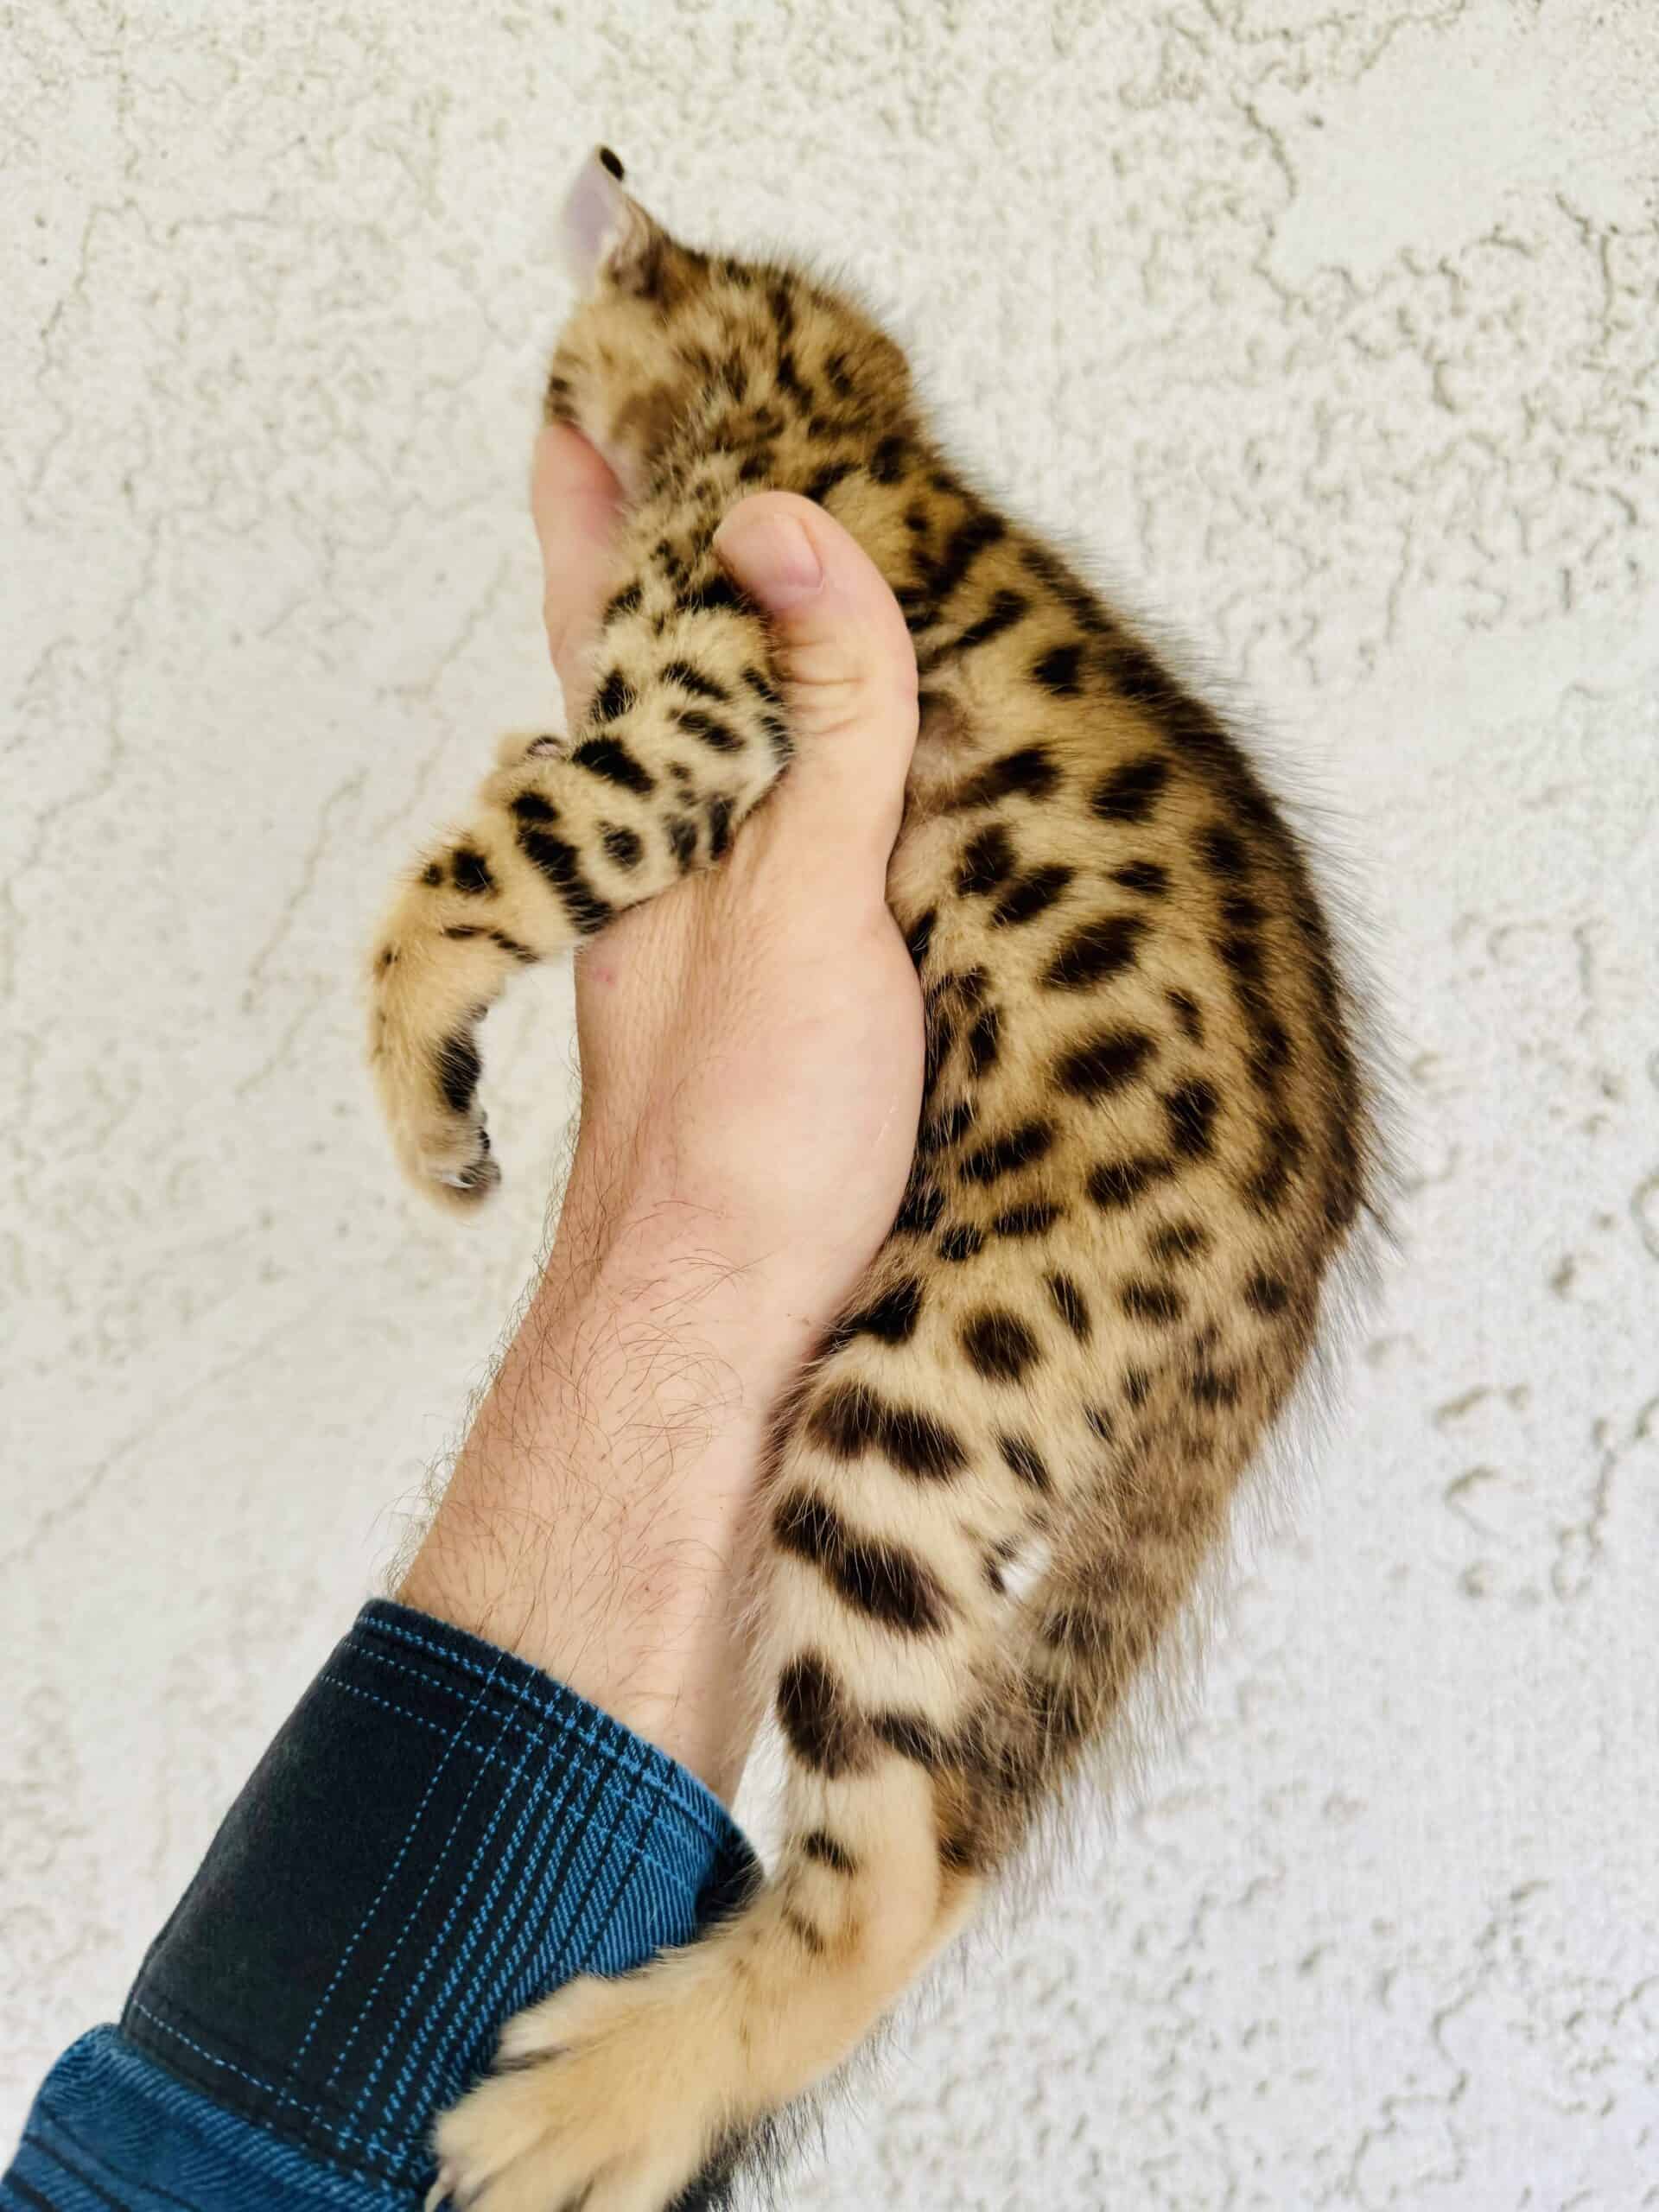 Savannah lynx jungle kittens | PetClassifieds.com